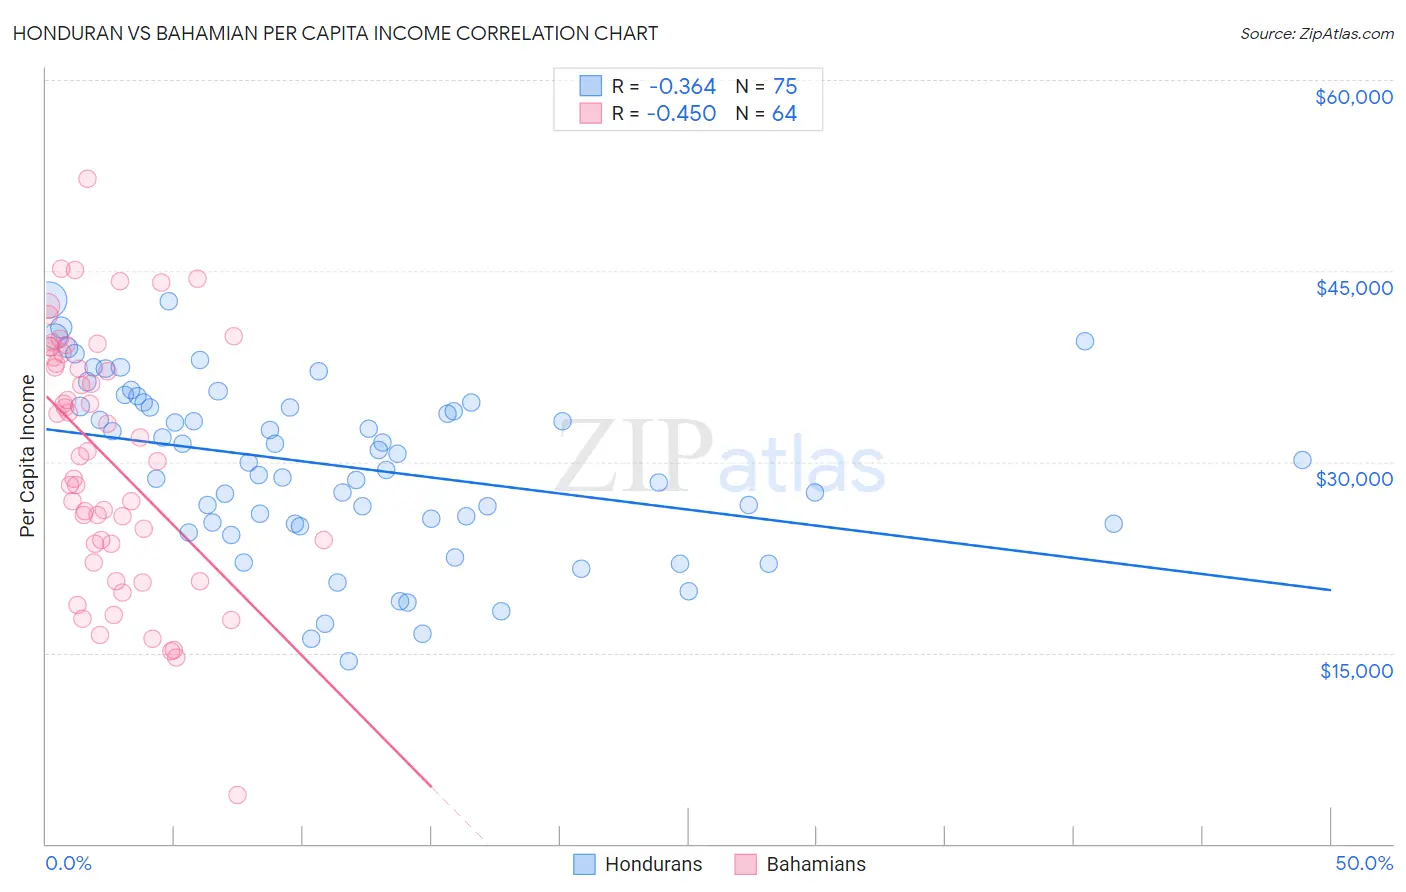 Honduran vs Bahamian Per Capita Income